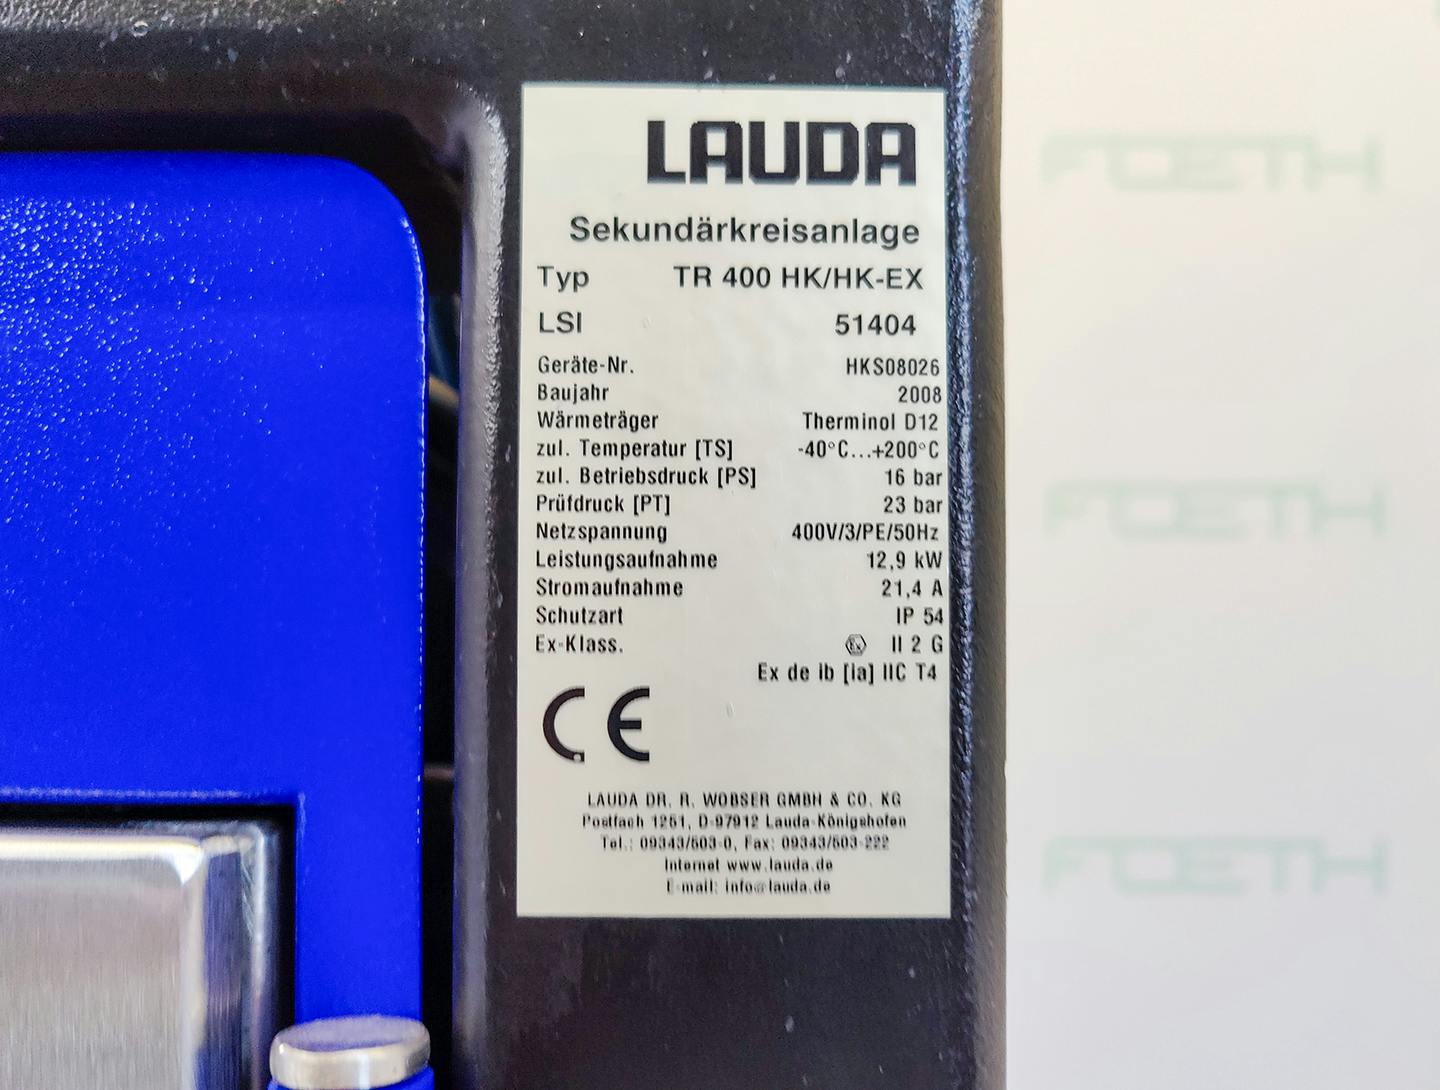 Lauda TR400 HK/HK-EX "secondary circuit system" - циркуляционный термостат - image 14